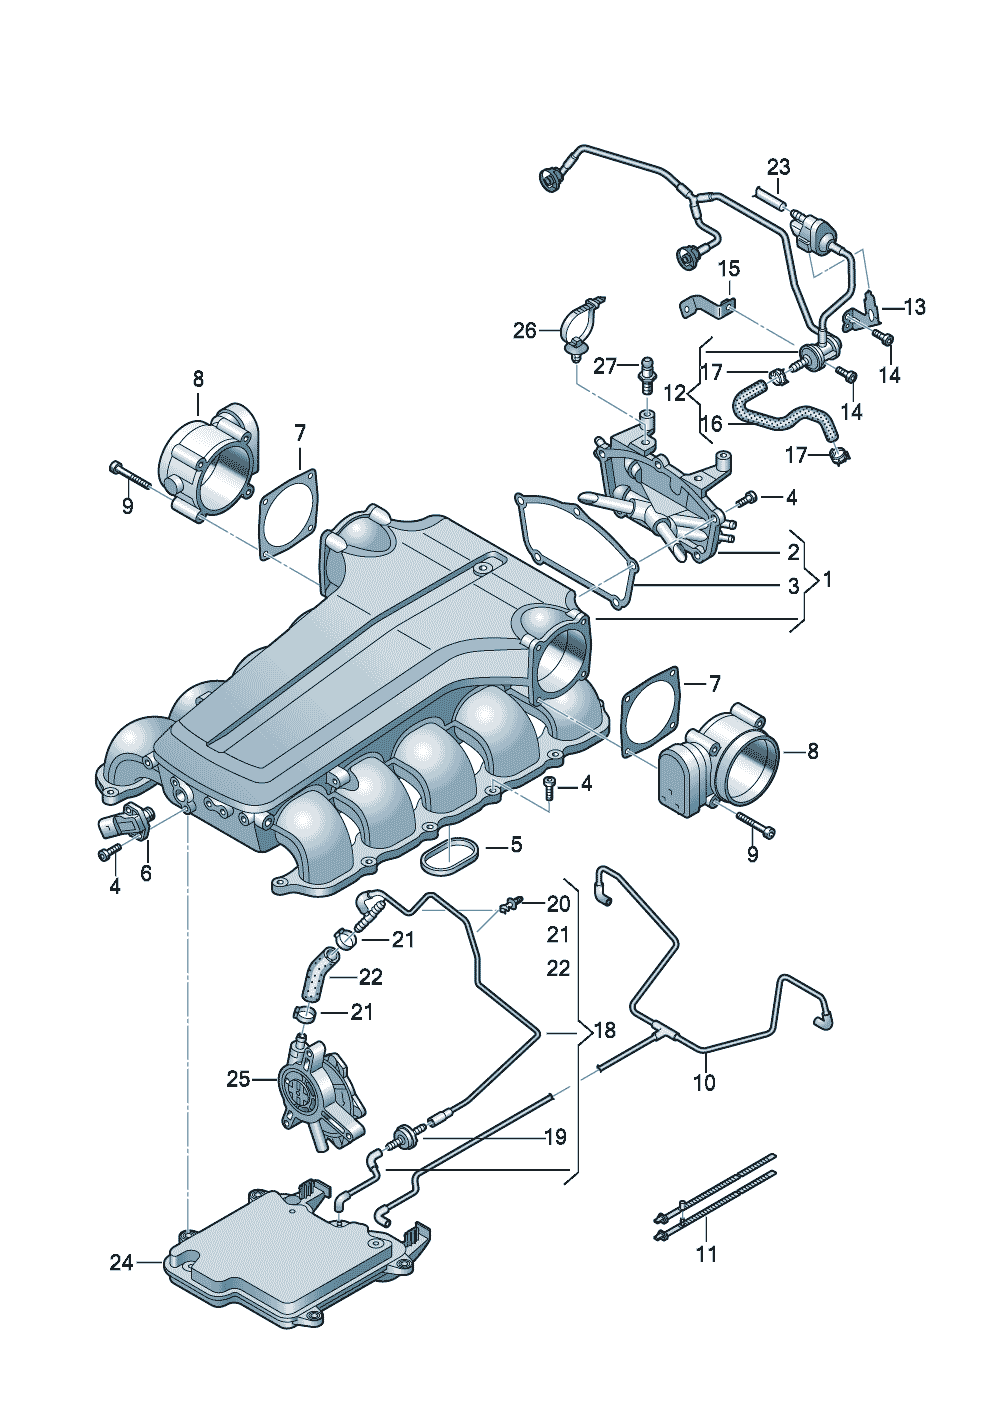 intake manifold - upper partvacuum system 5.0 Ltr. - Audi RS6RS6 plus/Avant qu. - rs6